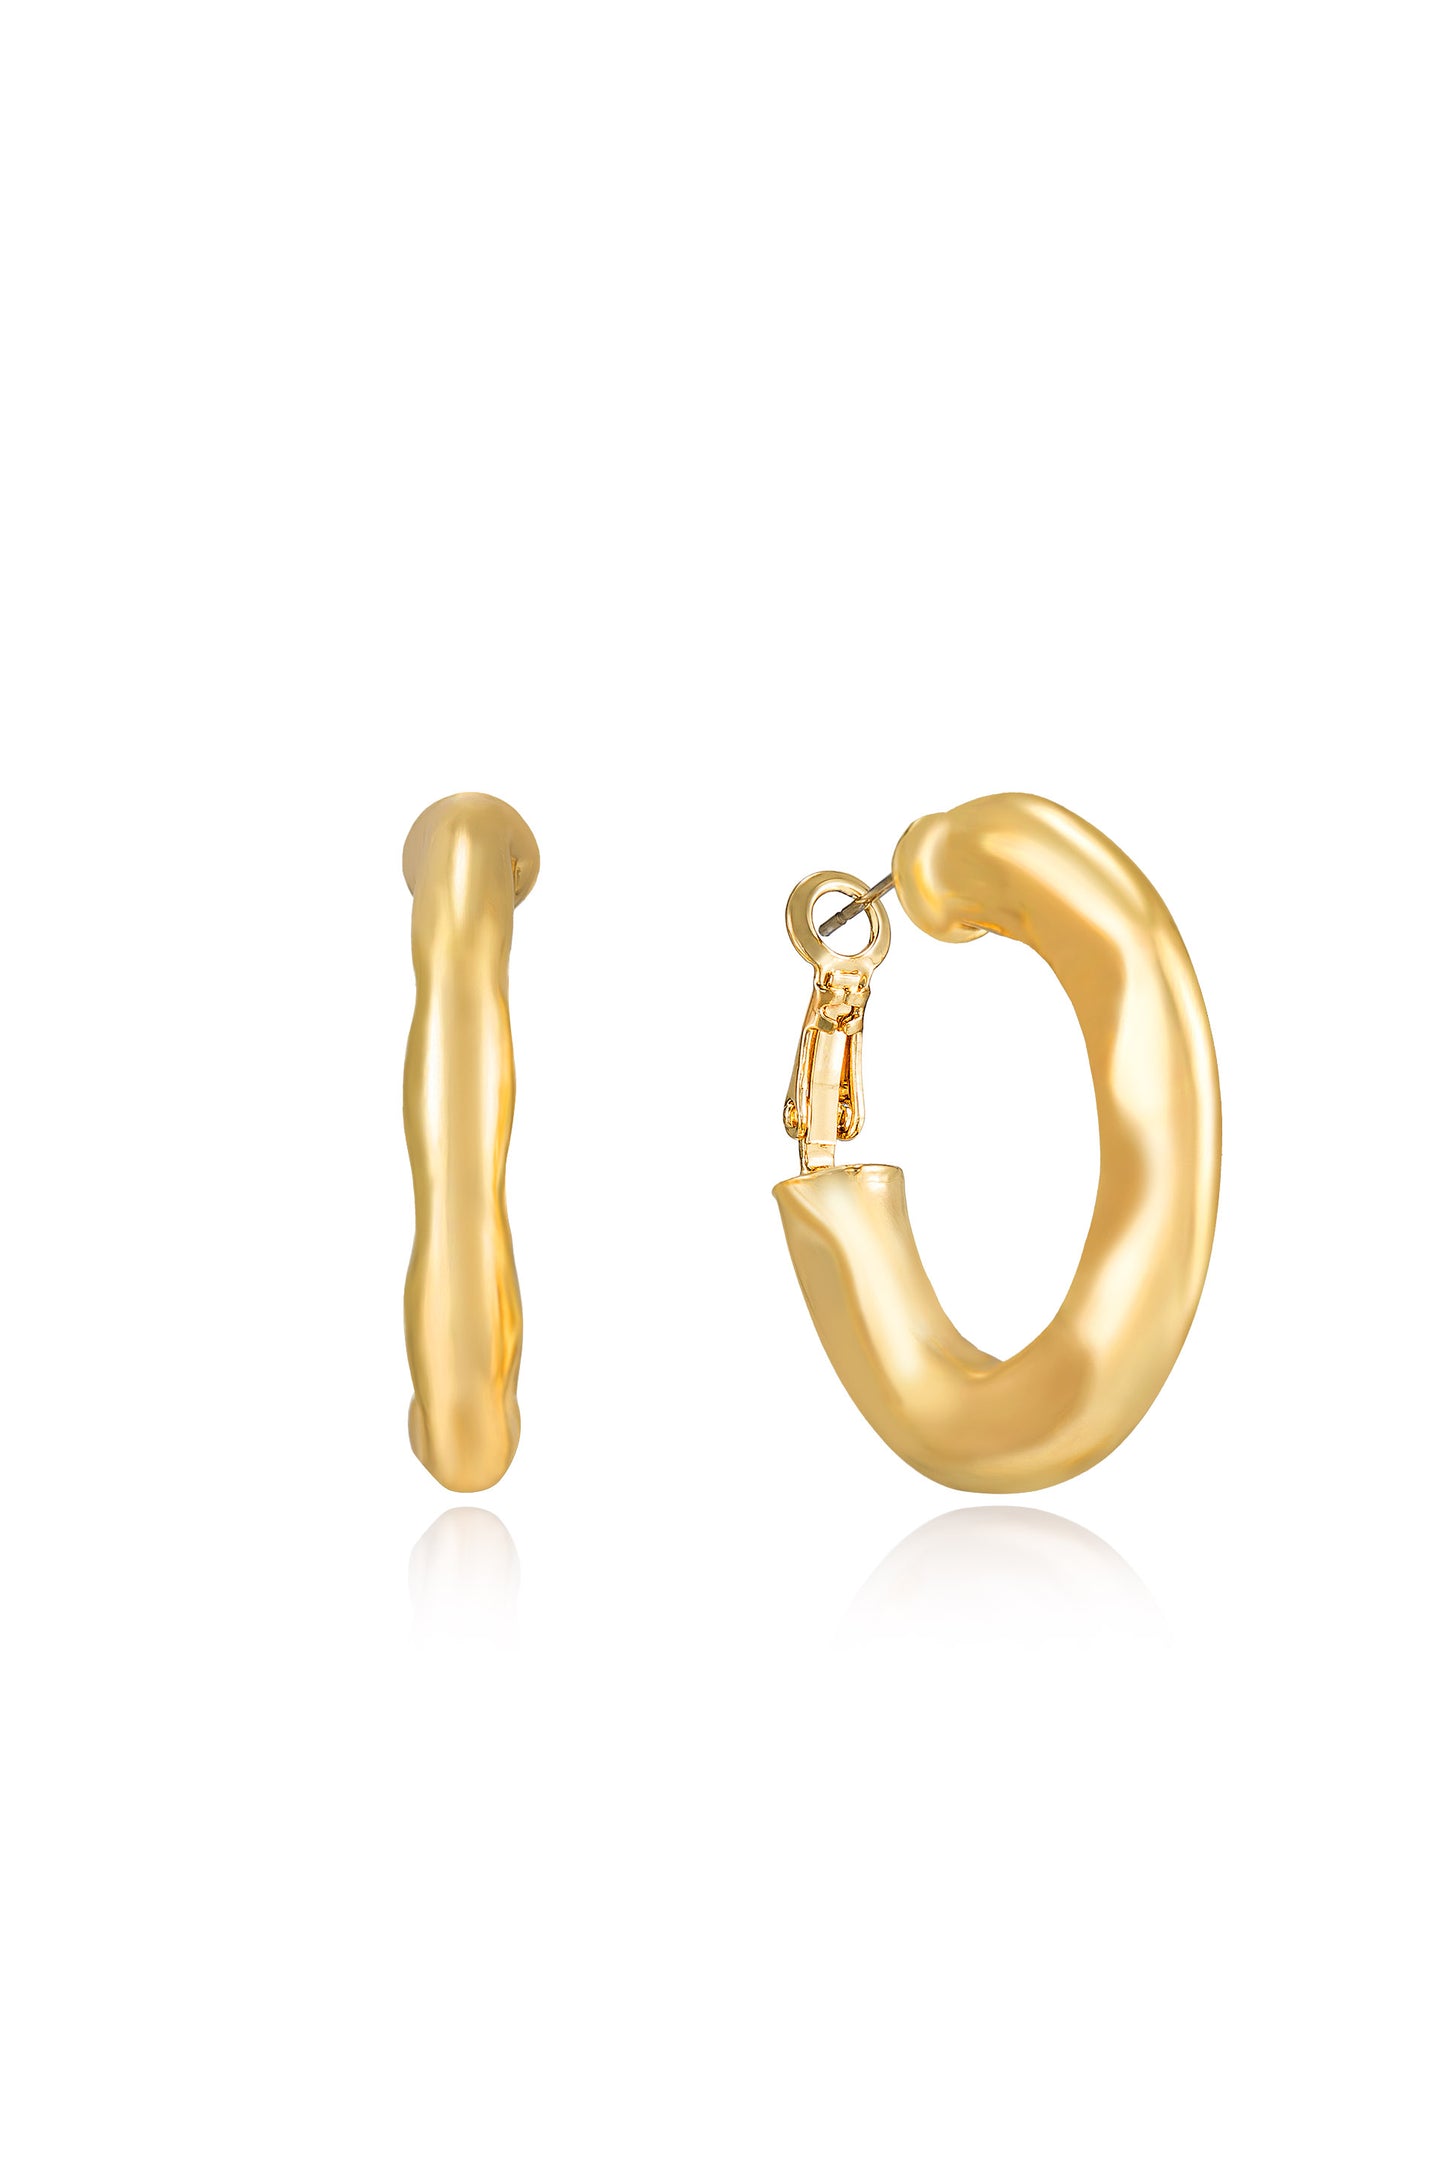 Soft Golden Textured 18k Gold Plated Hoop Earrings